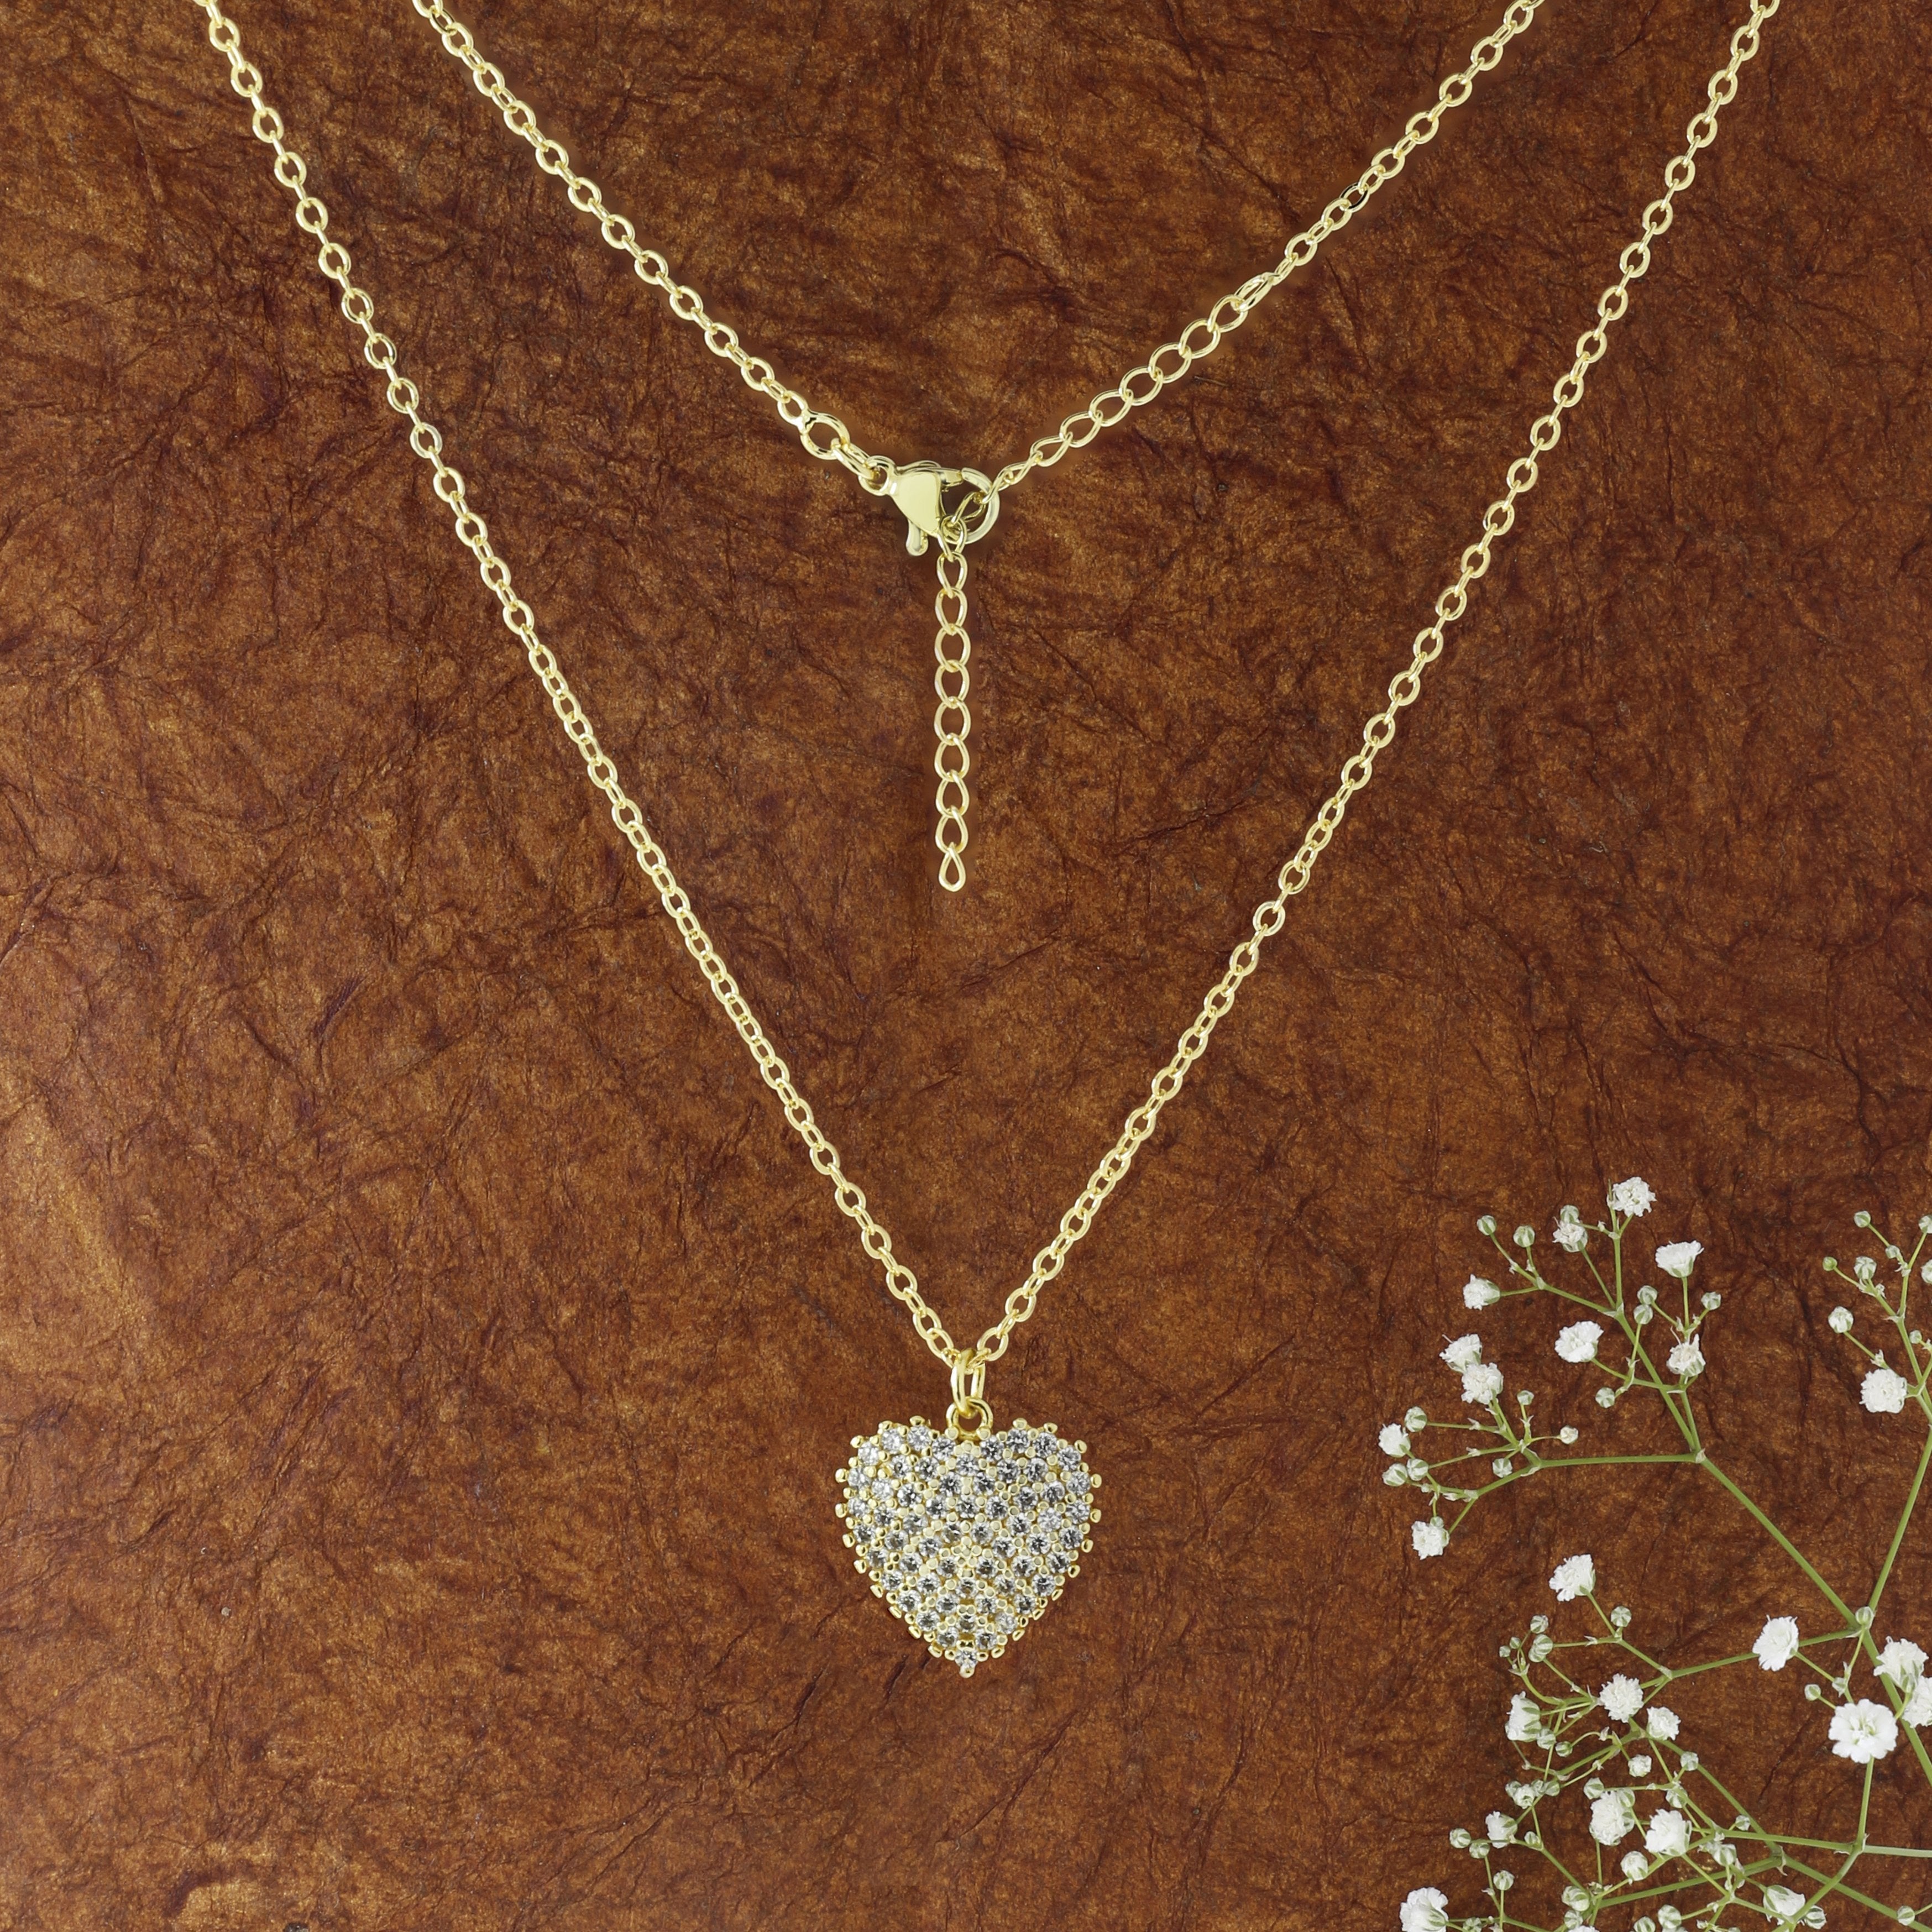 American Diamond Heart Necklace Pendant Chain